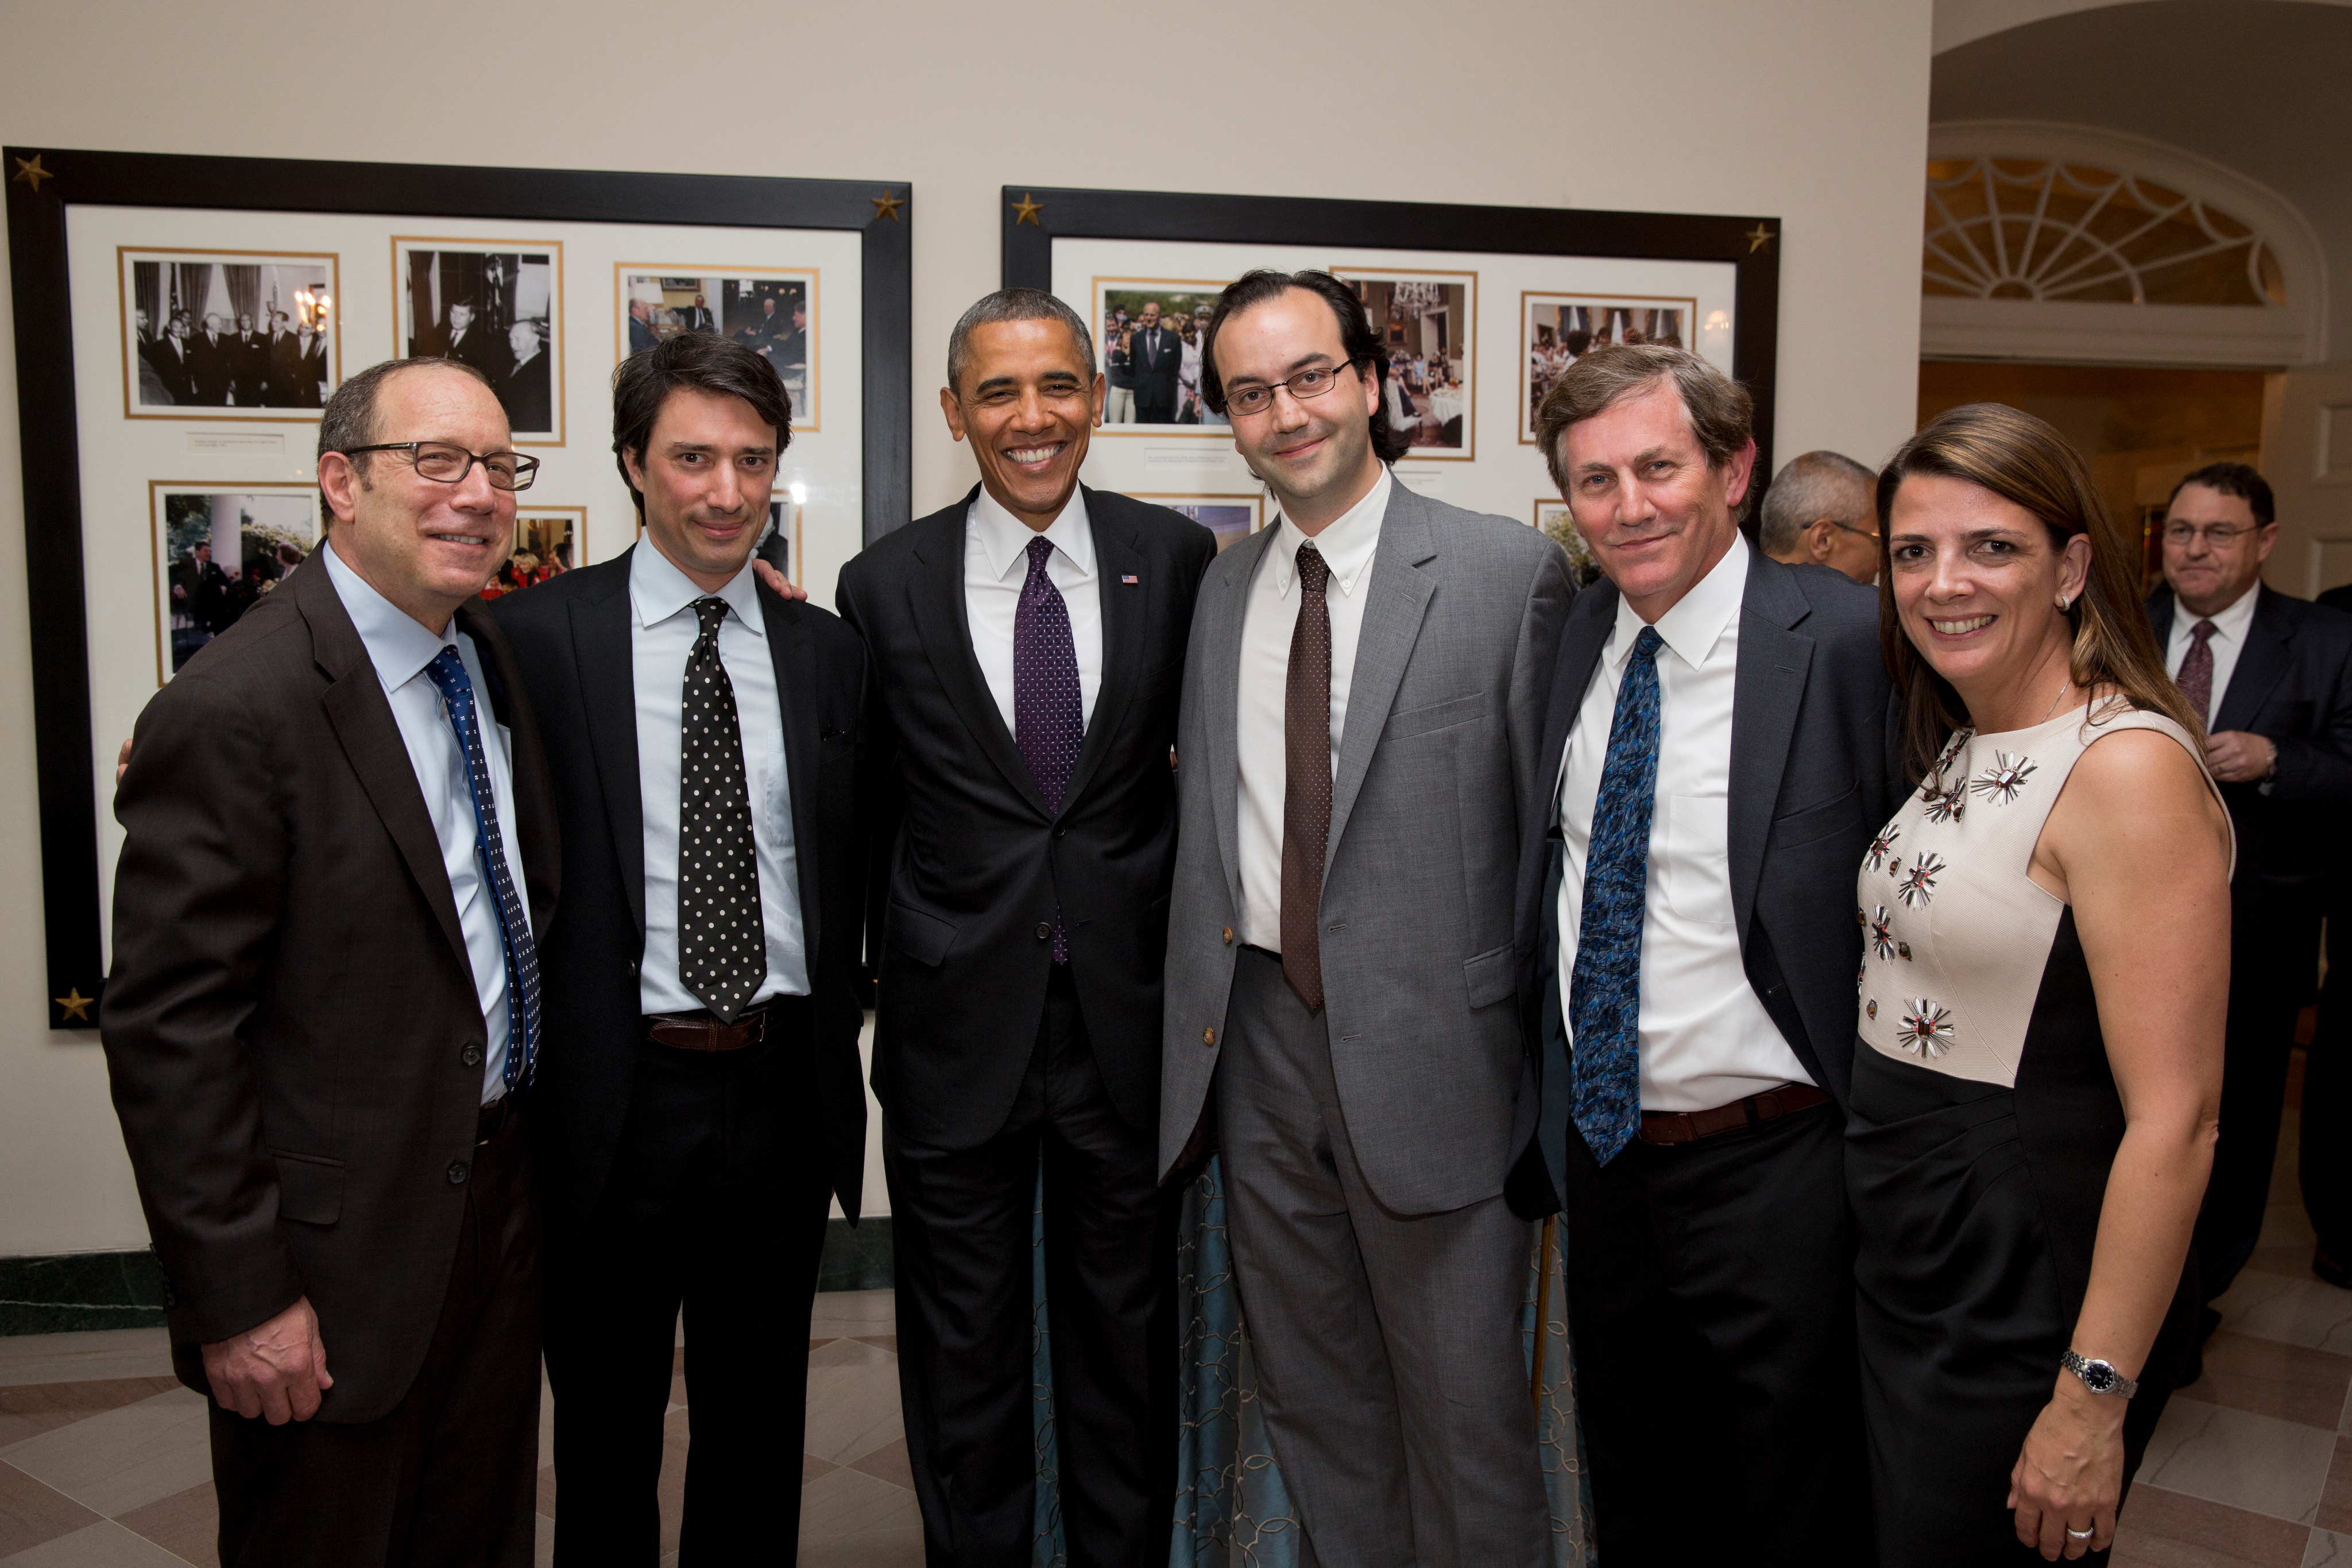 From Left to Right, Knute Walter; Gedeon Naudet; President Obama; Jules Naudet; Chris Whipple; Nancy Daniels, Screening at the White House, The Presidents' Gatekeepers